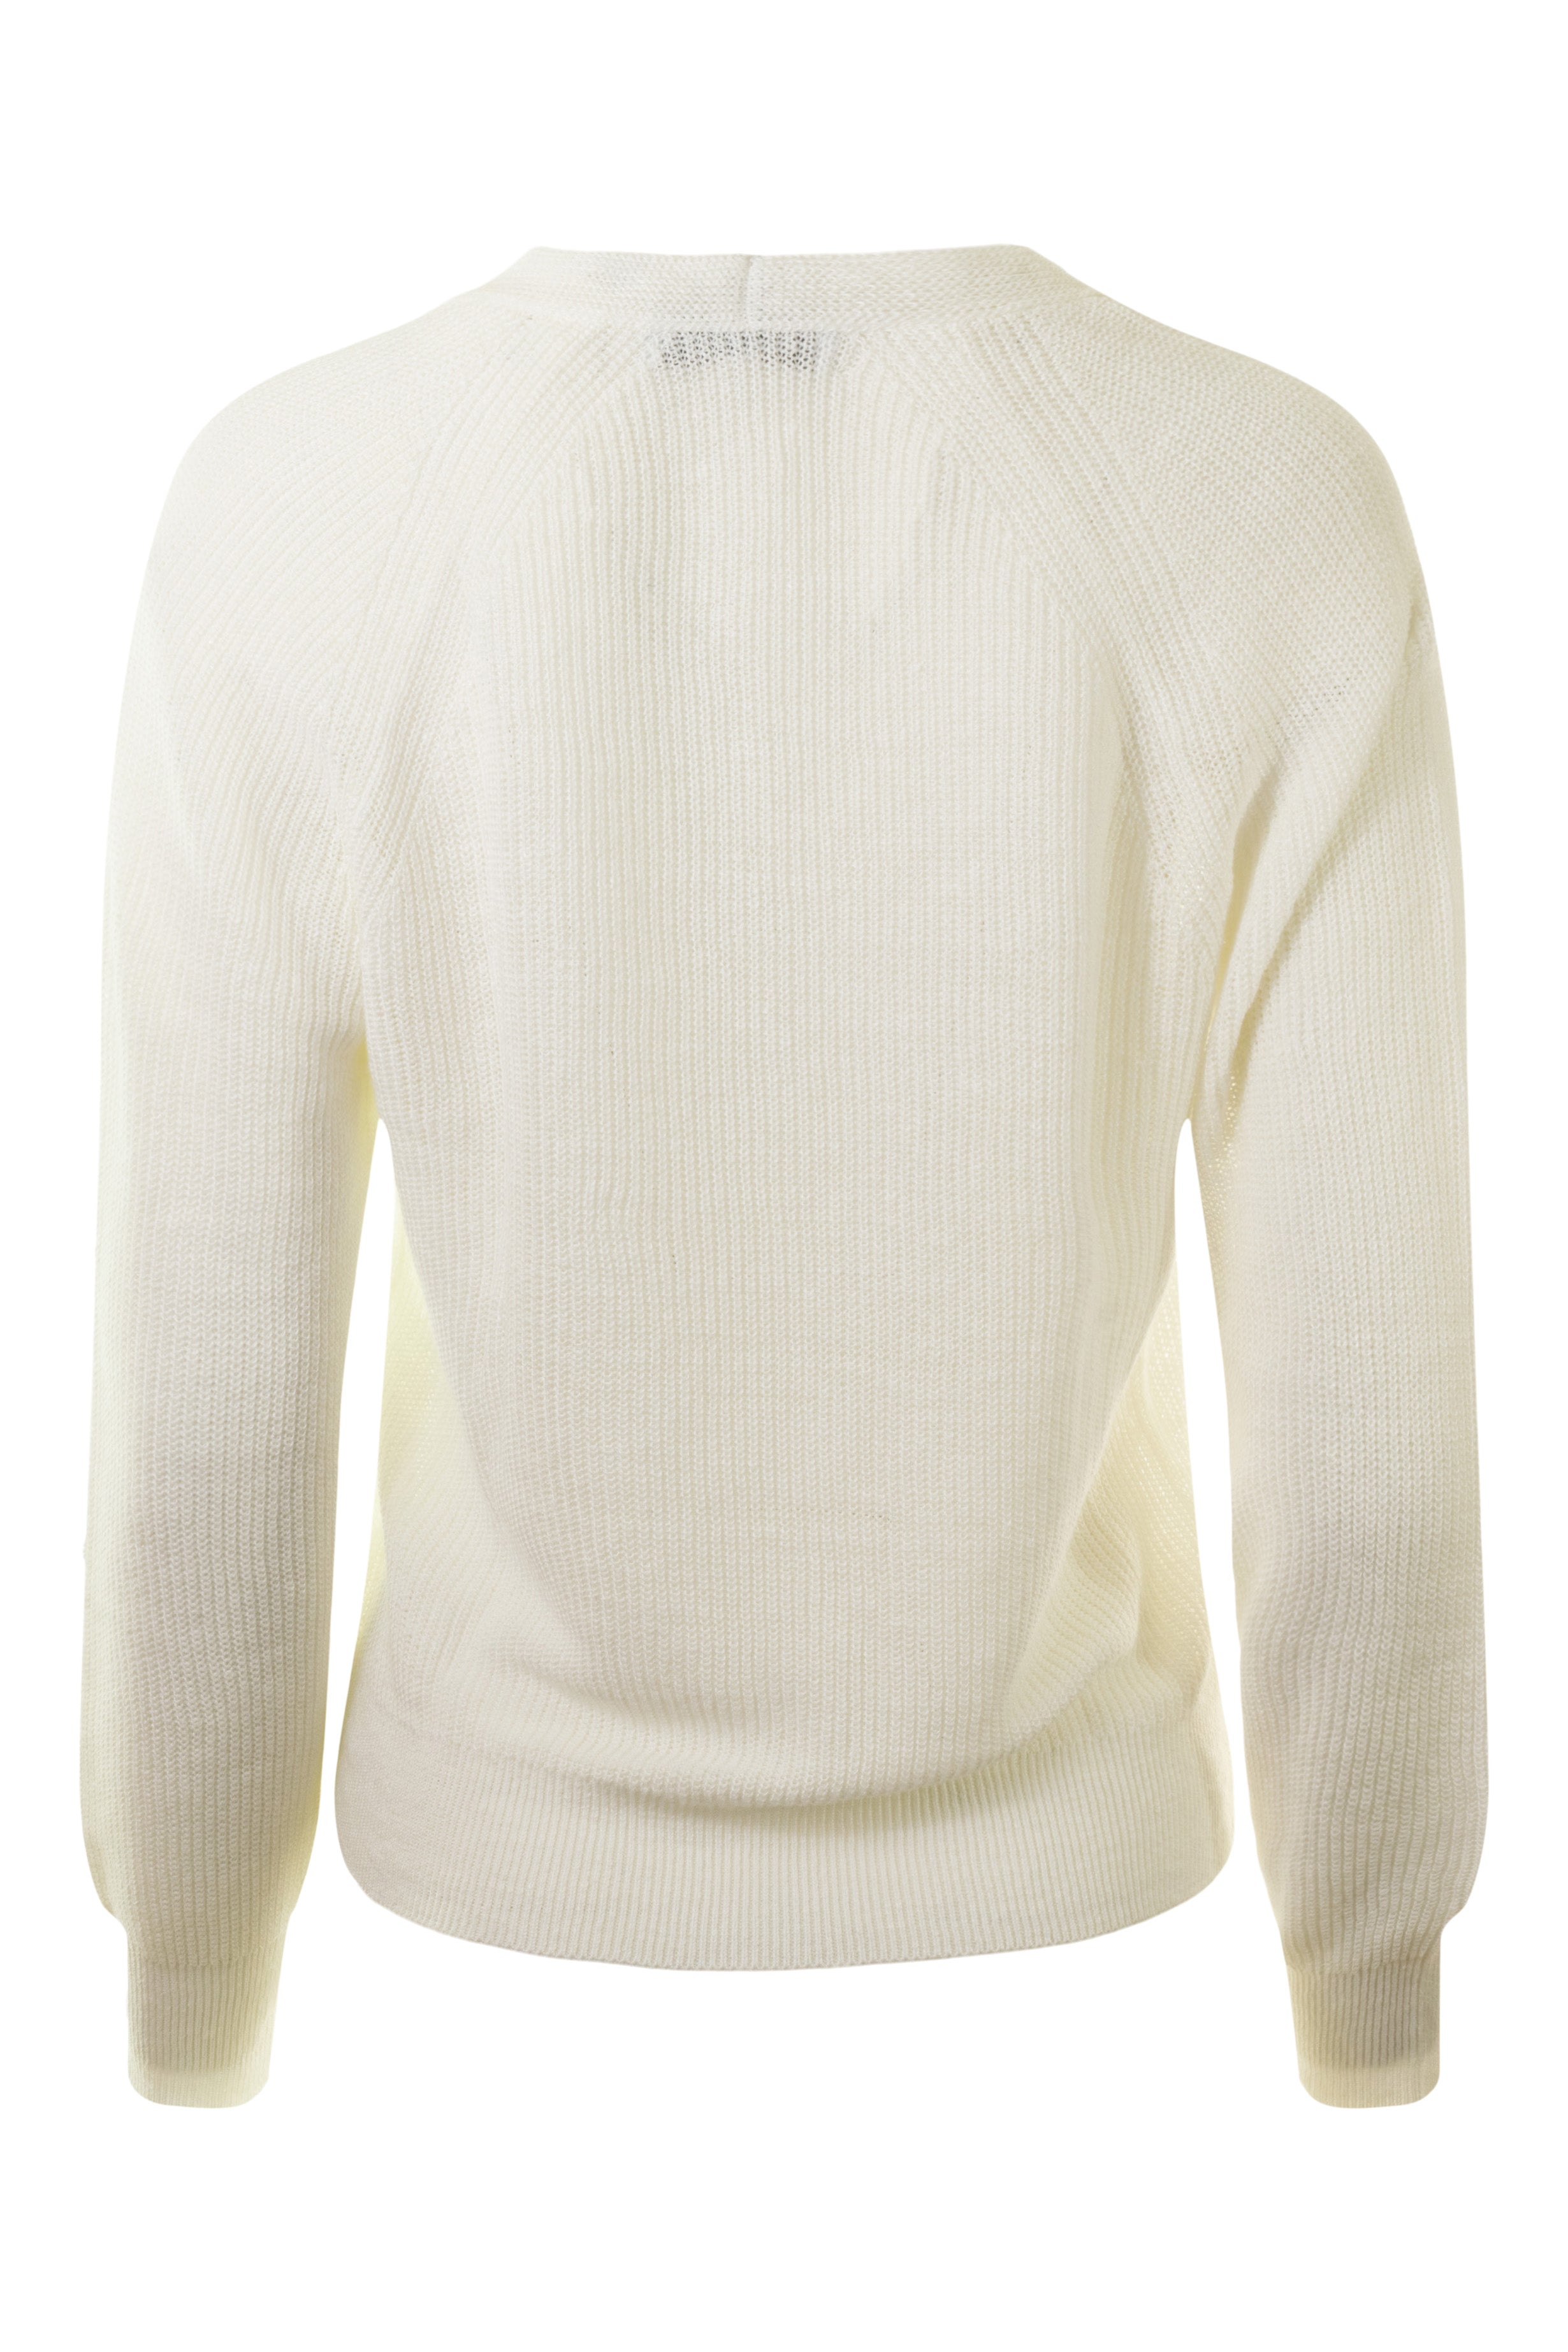 White & Warren Classic Ribbed V-neck Sweater in White